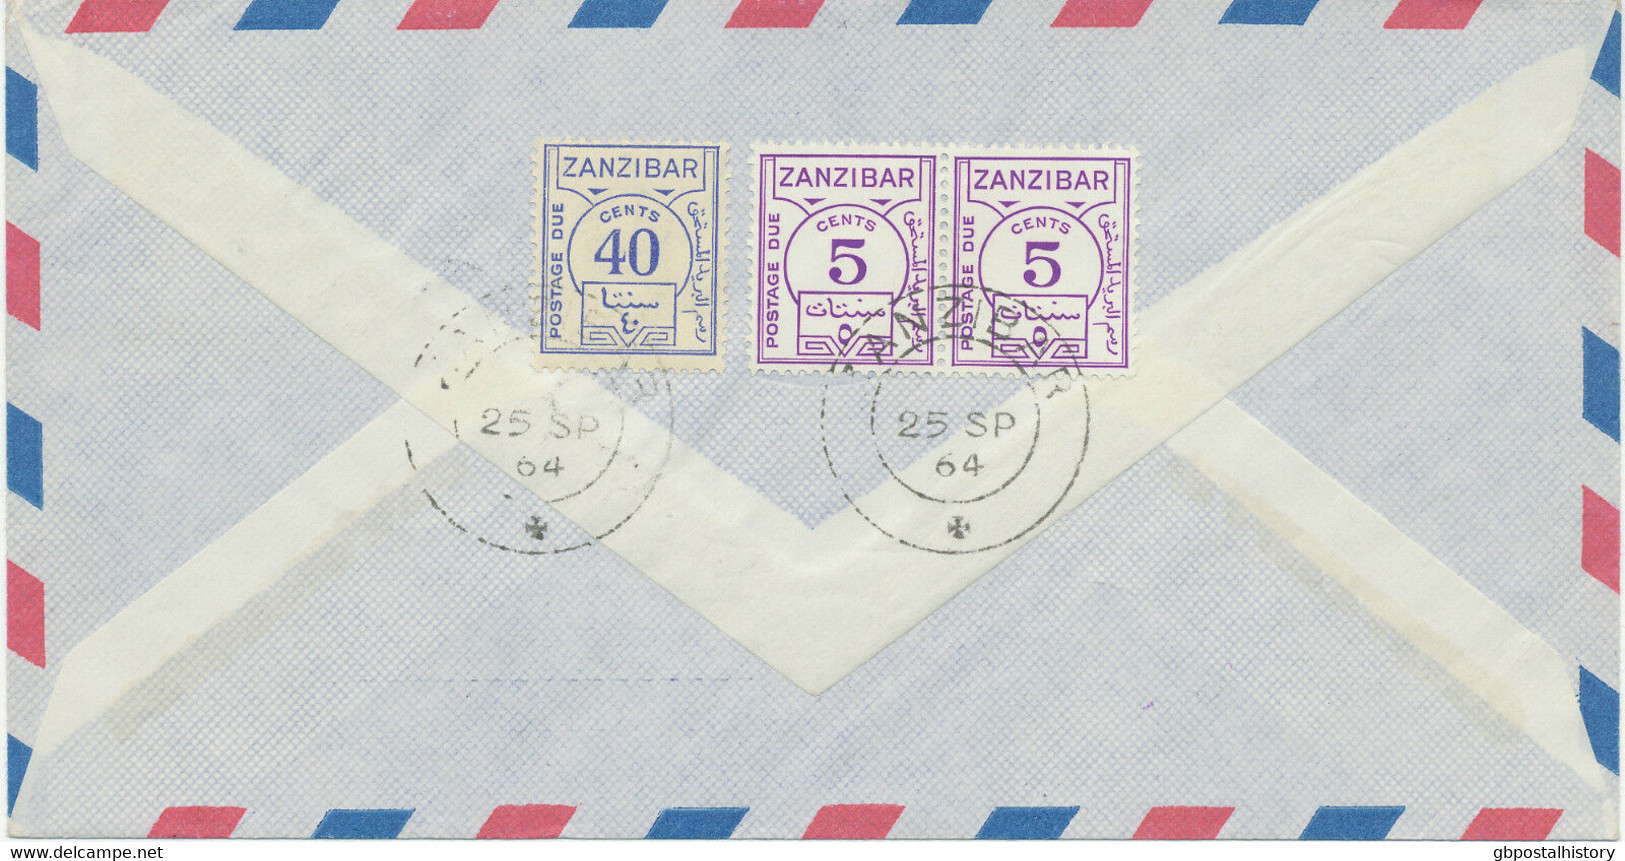 ZANZIBAR 1964 POSTAGE DUE 50 C. On Airmail-cvr From Germany EXHIBITION-ITEM - Zanzibar (...-1963)